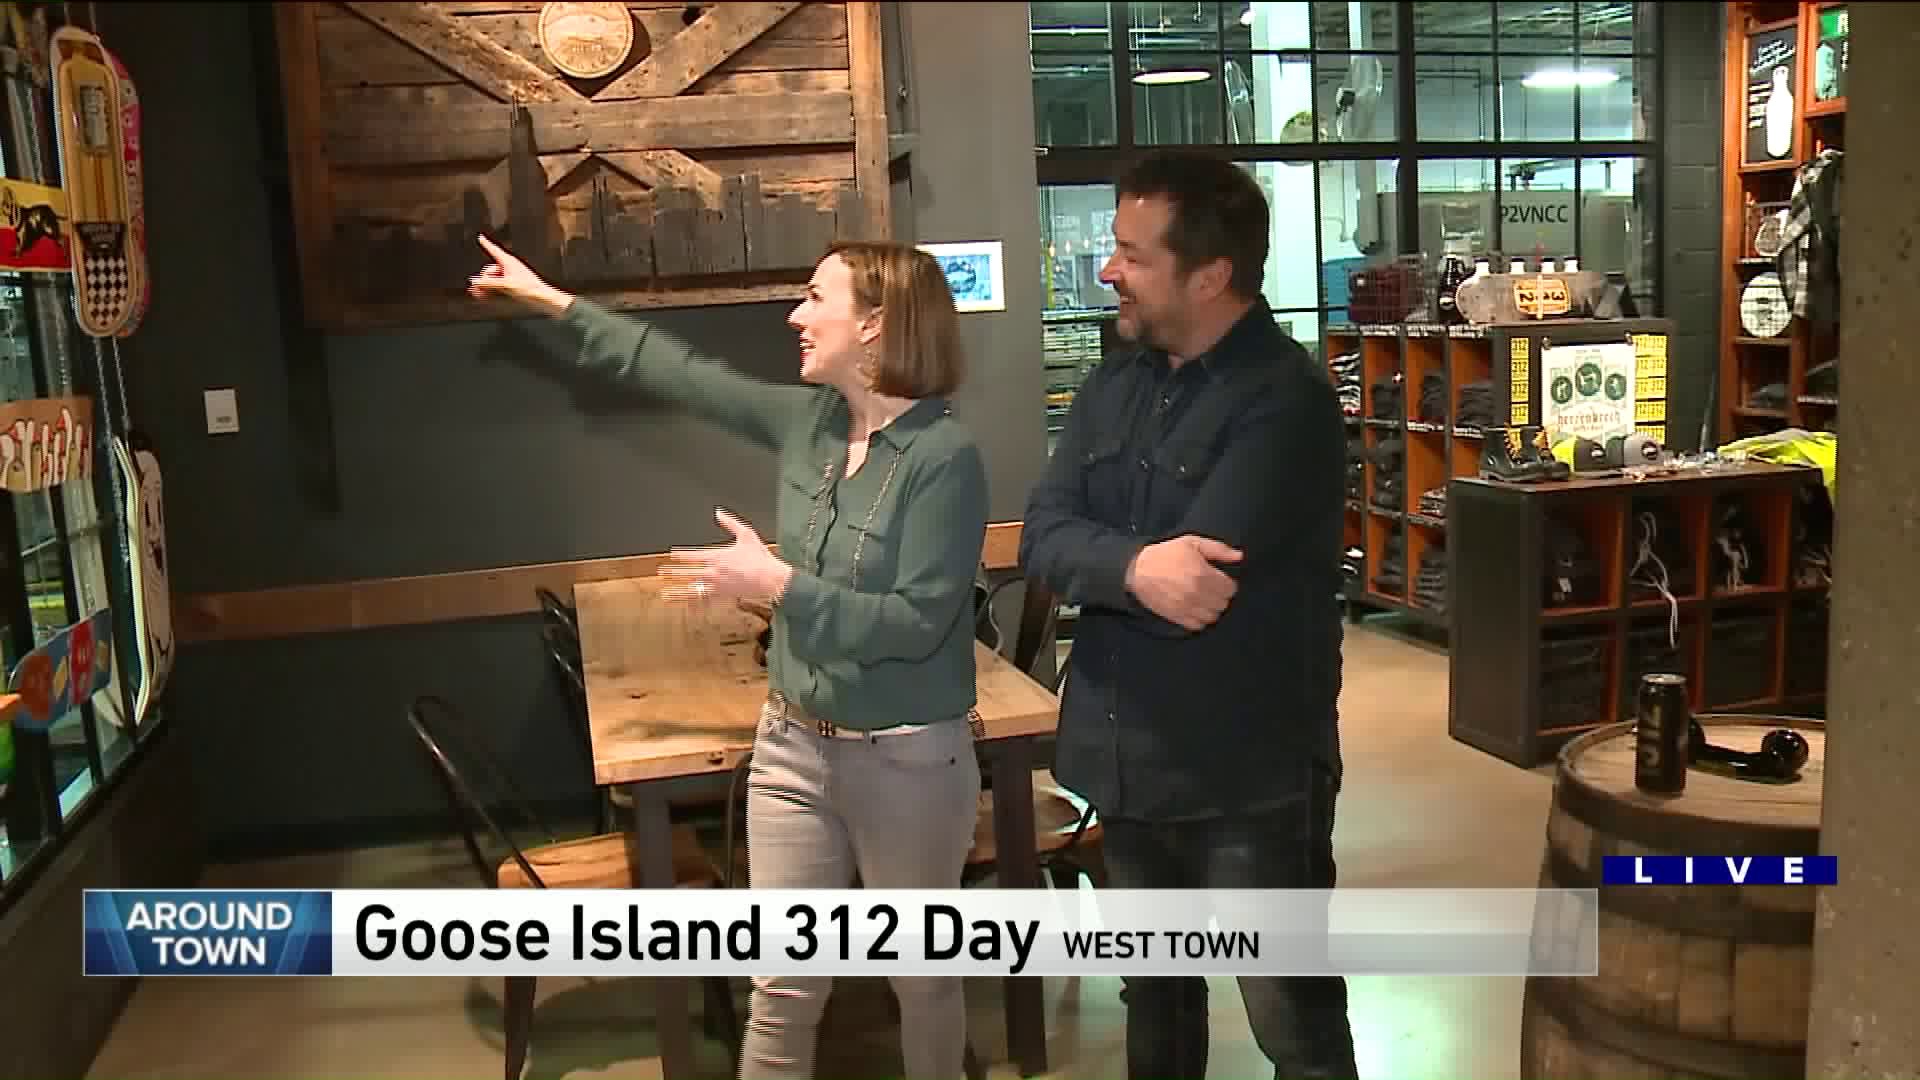 Around Town celebrates 312 Day at Goose Island